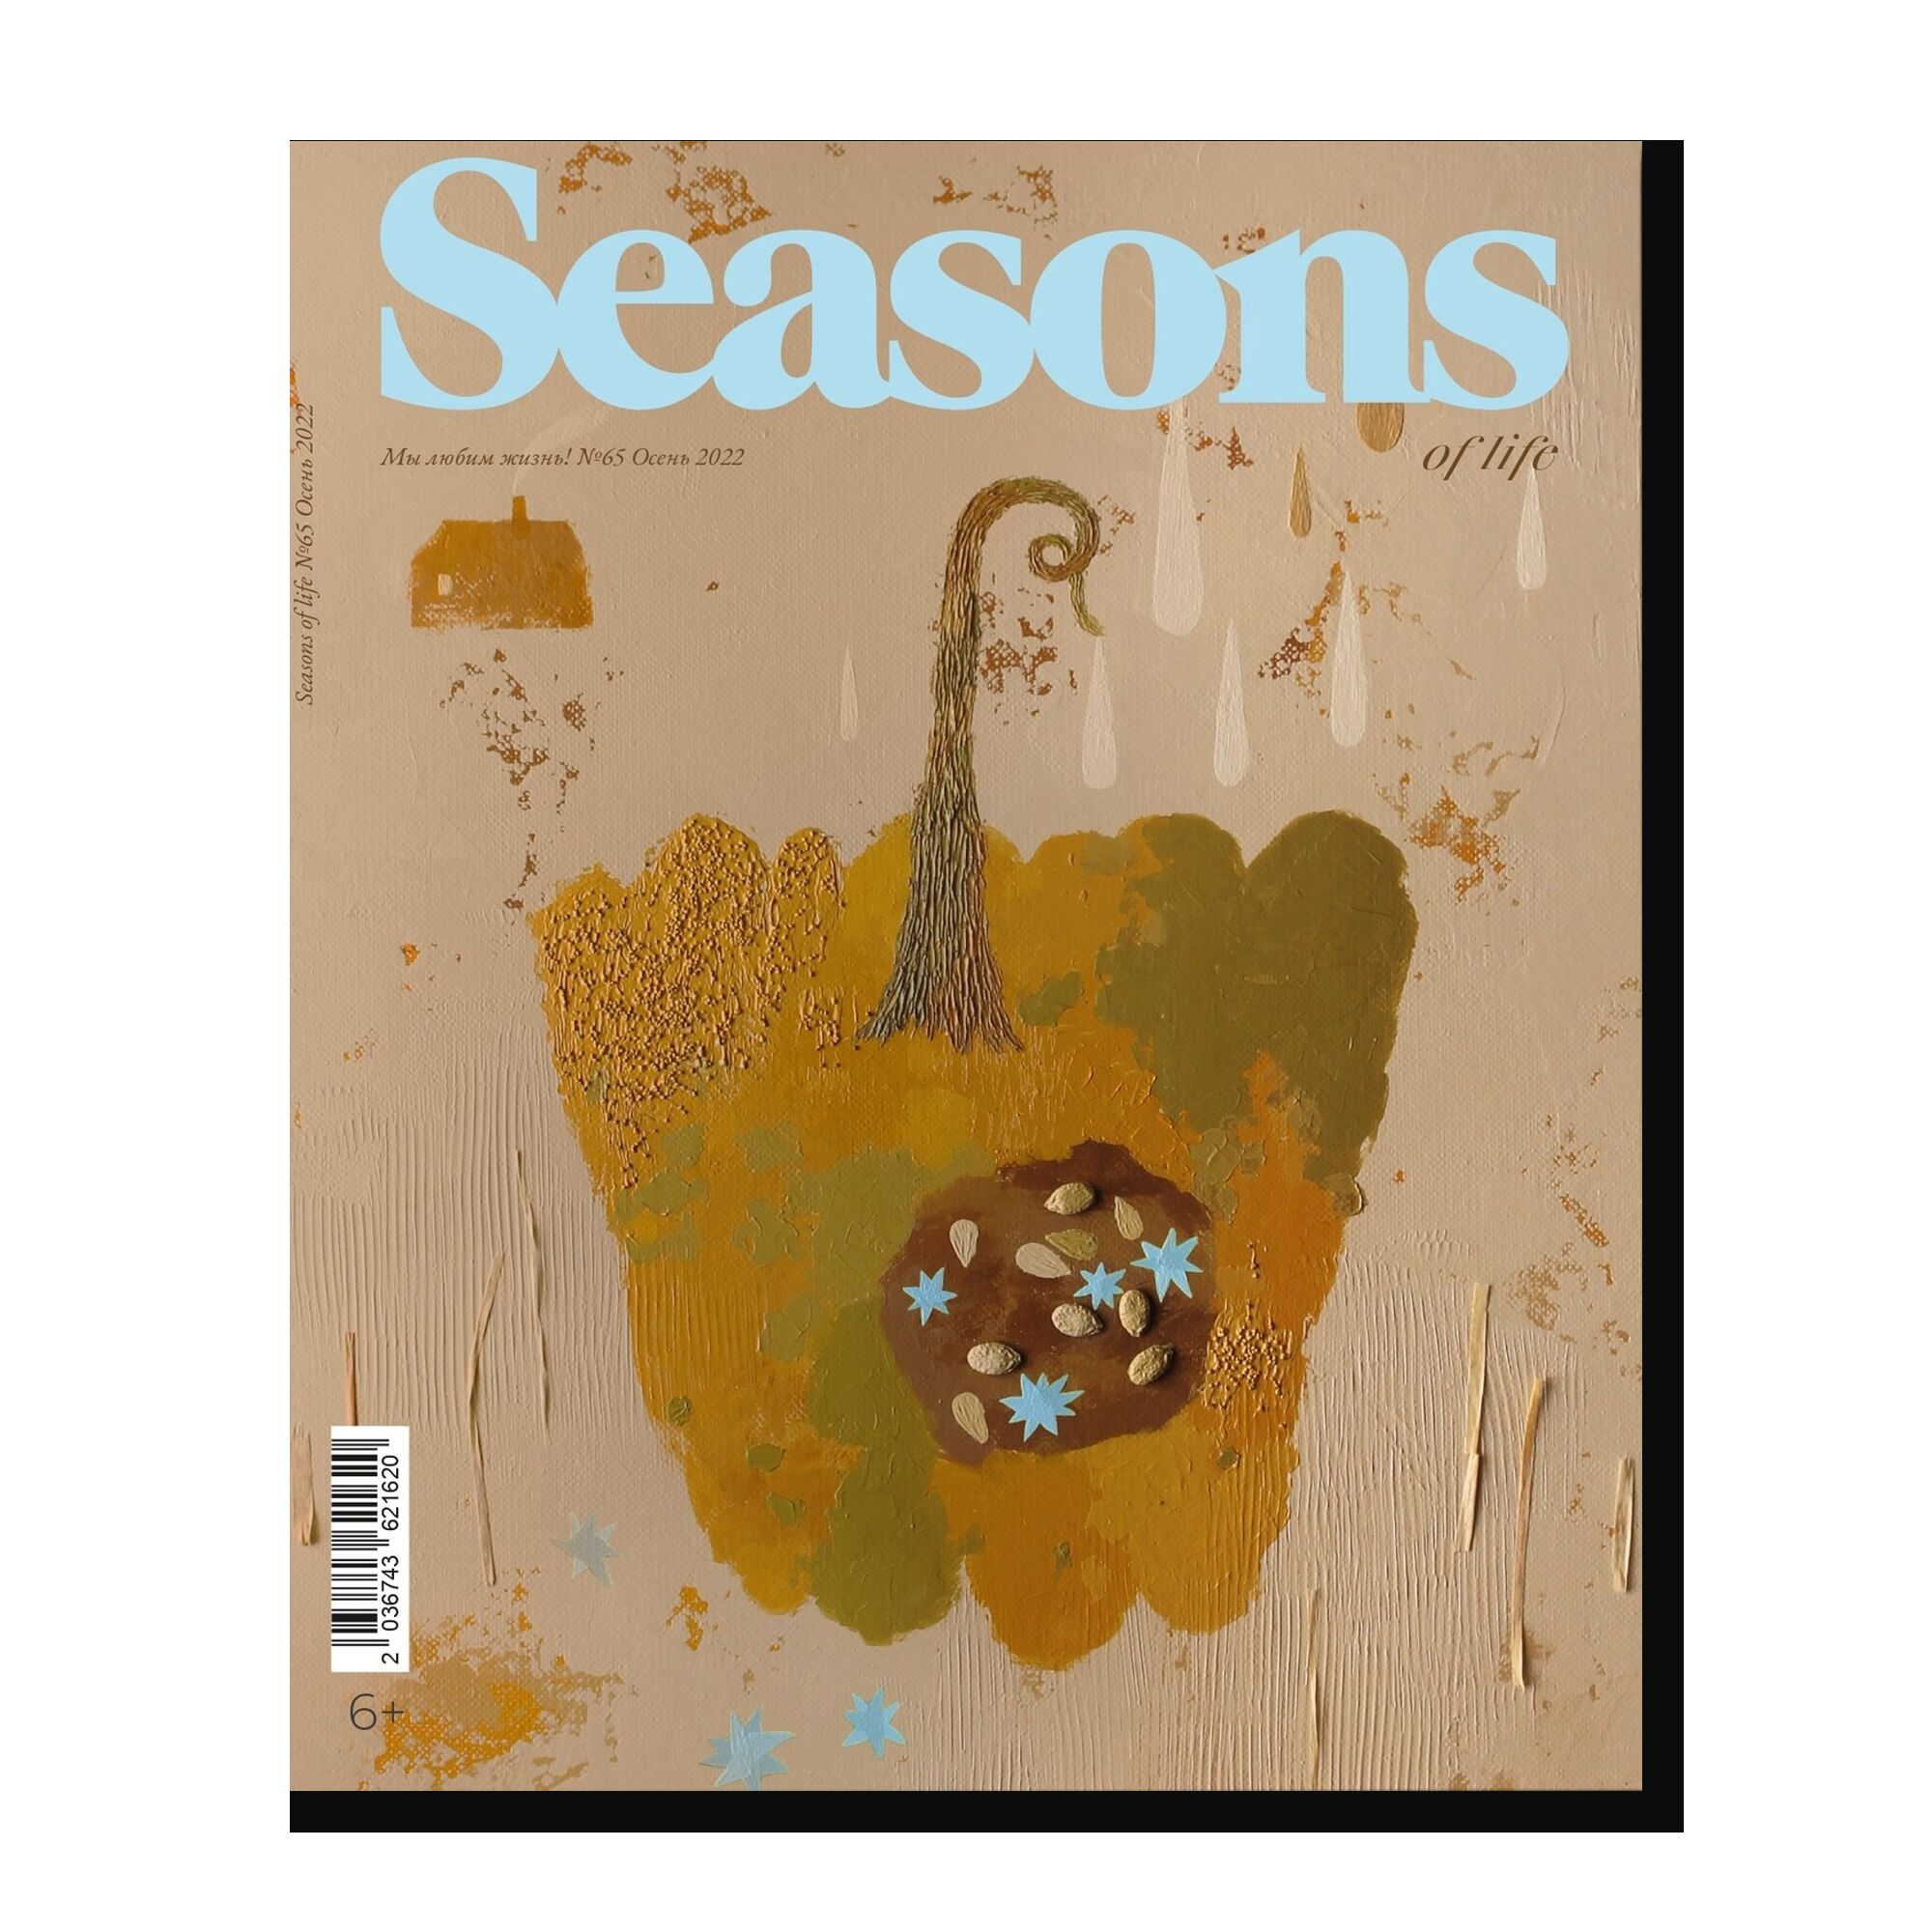 Журнал Seasons of life №65 (осень 2022)